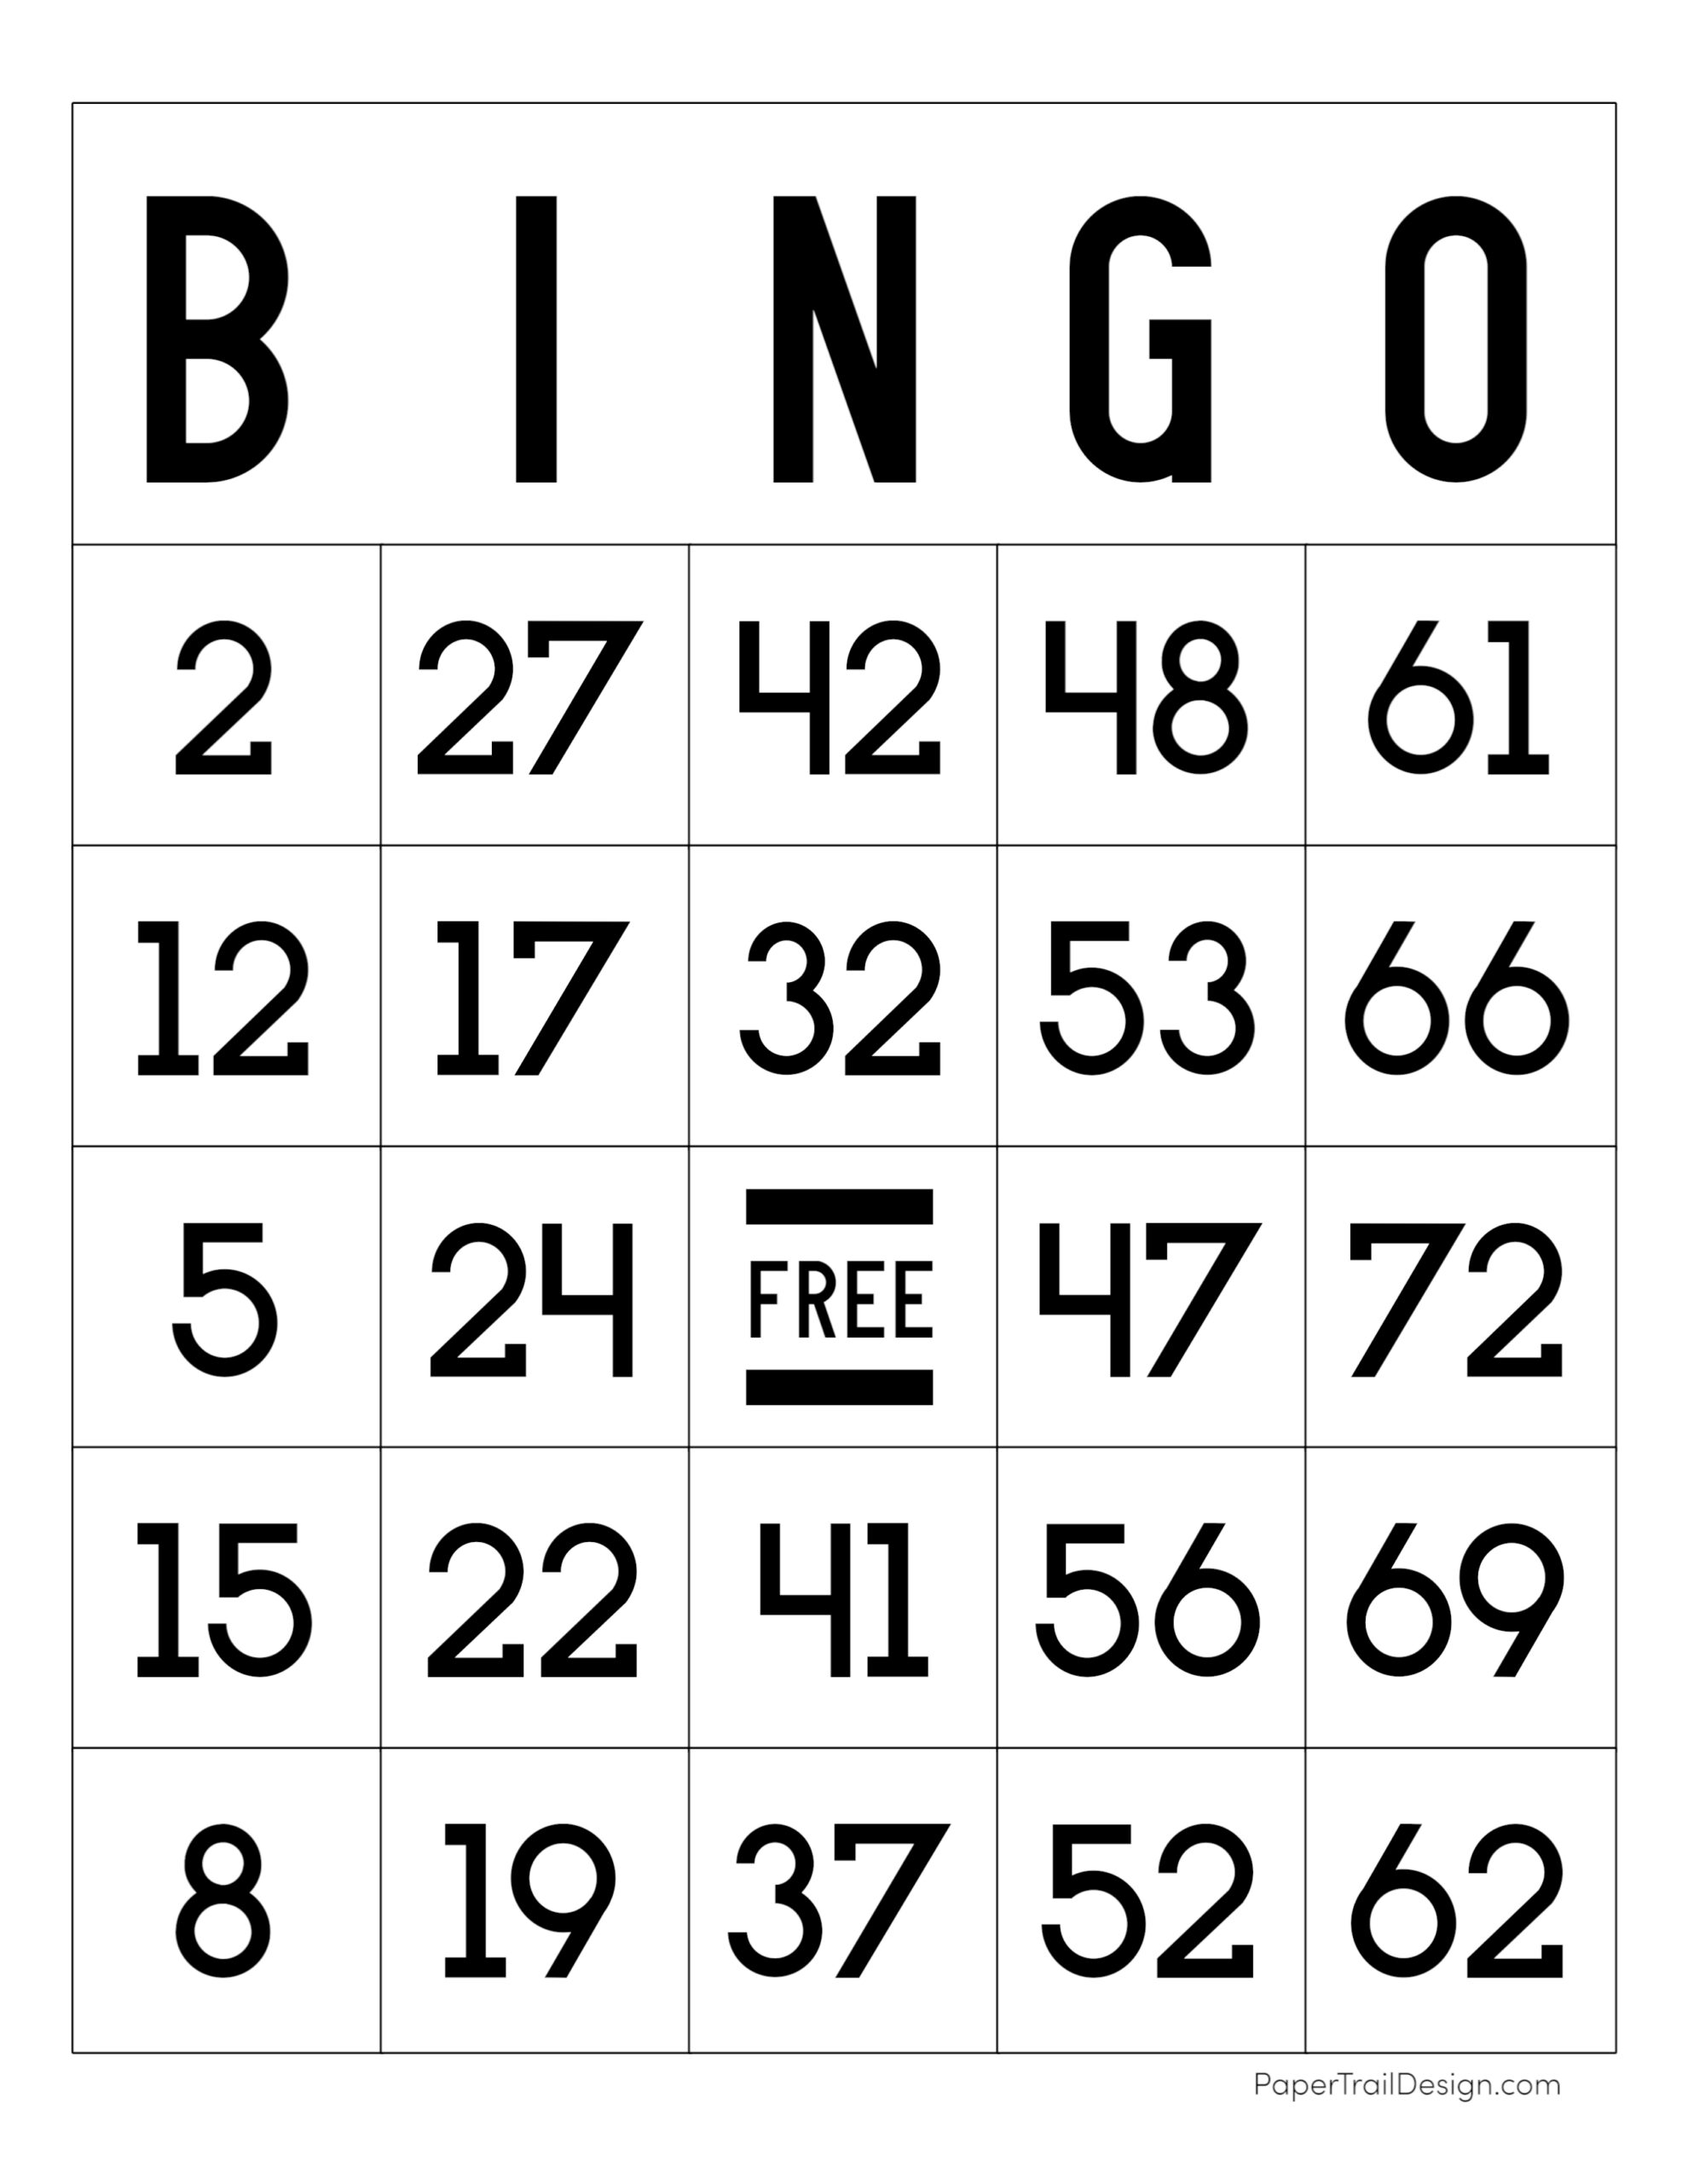 printable-games-for-kids-printable-shelter-bingo-card-template